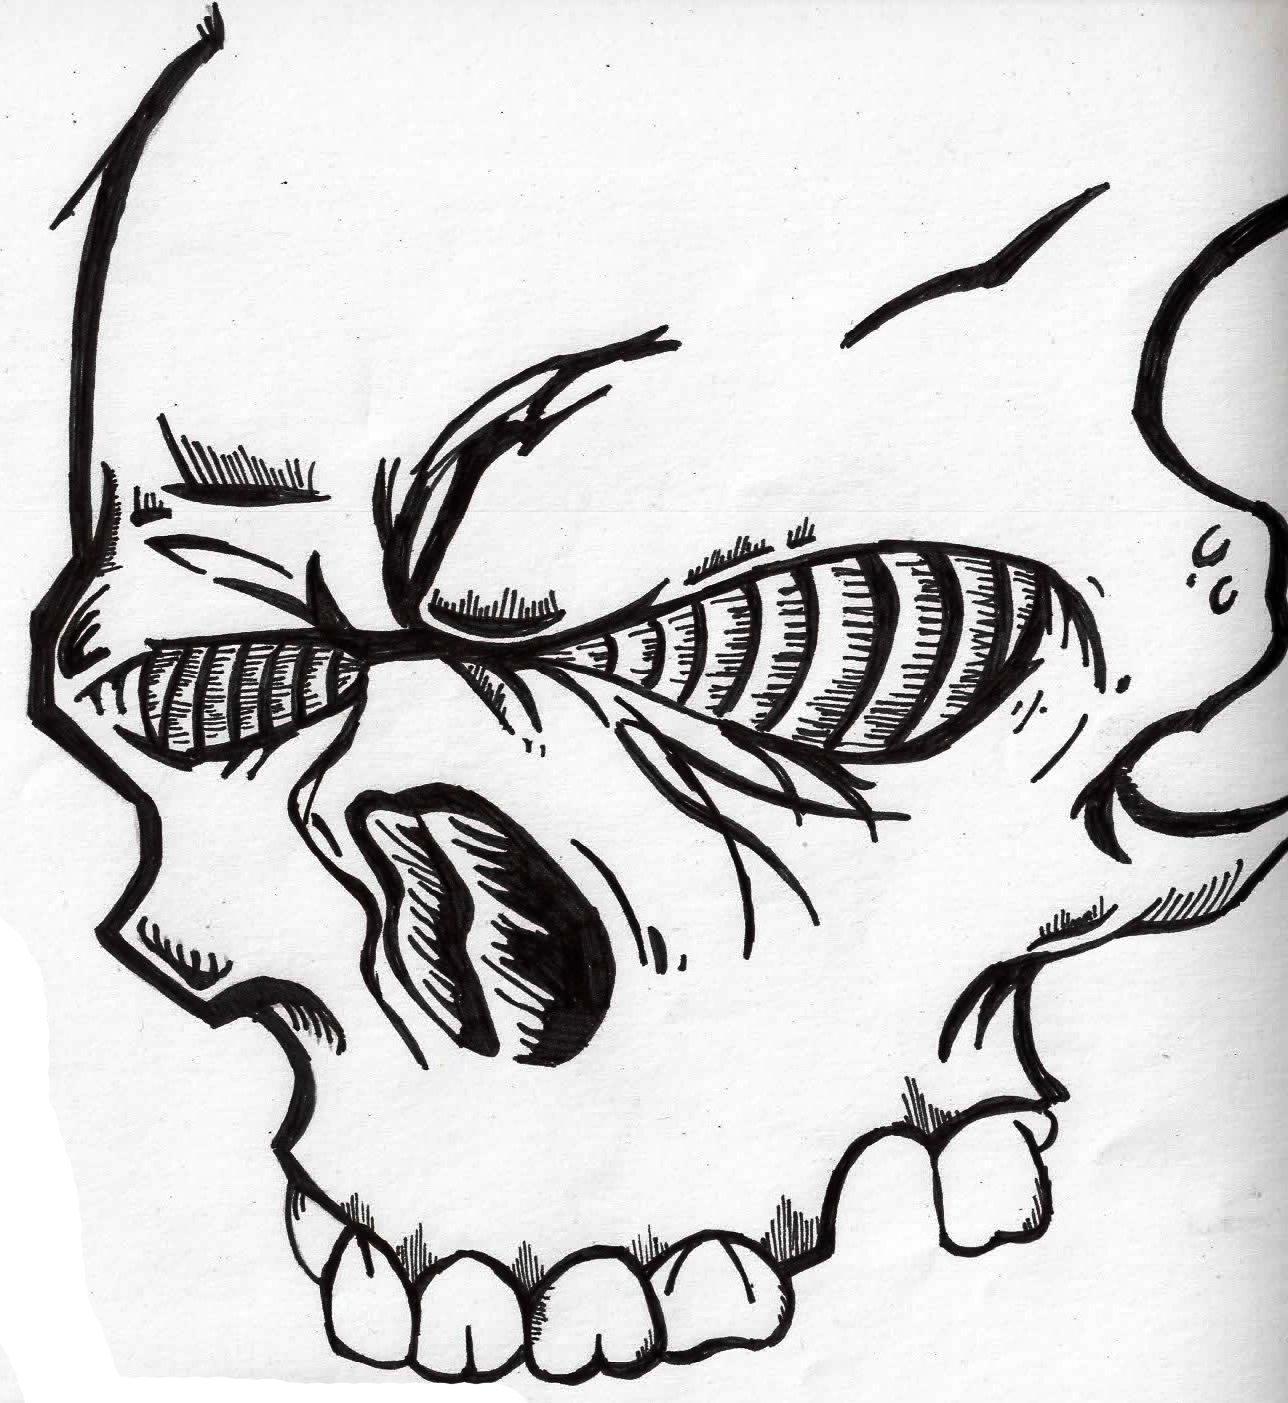 Graffiti Skull Drawings Graffiti Skull on Student Show Jack Firastr42